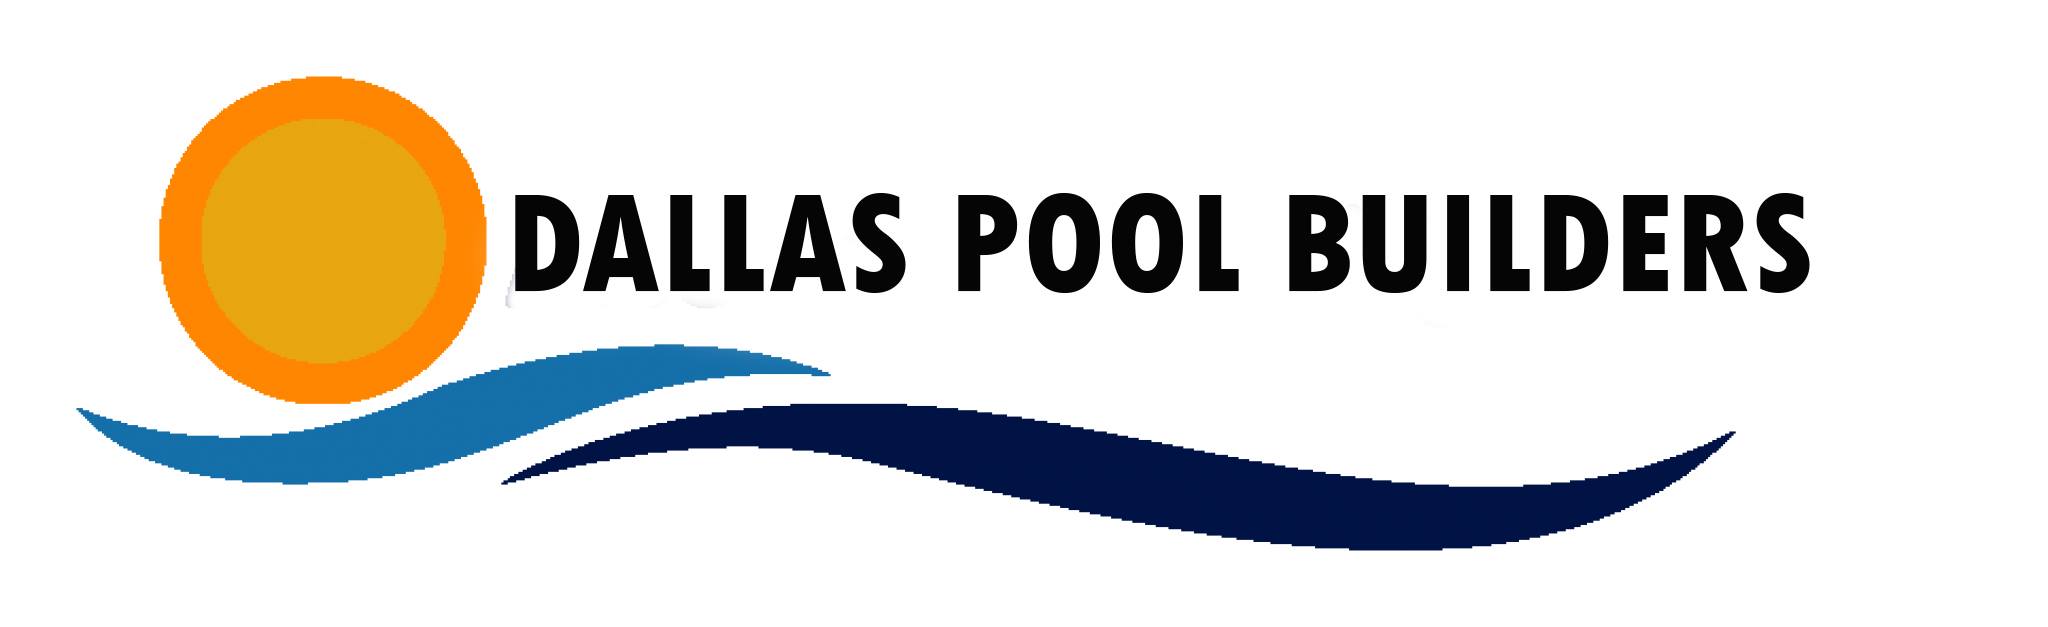 dallas pool builders logo